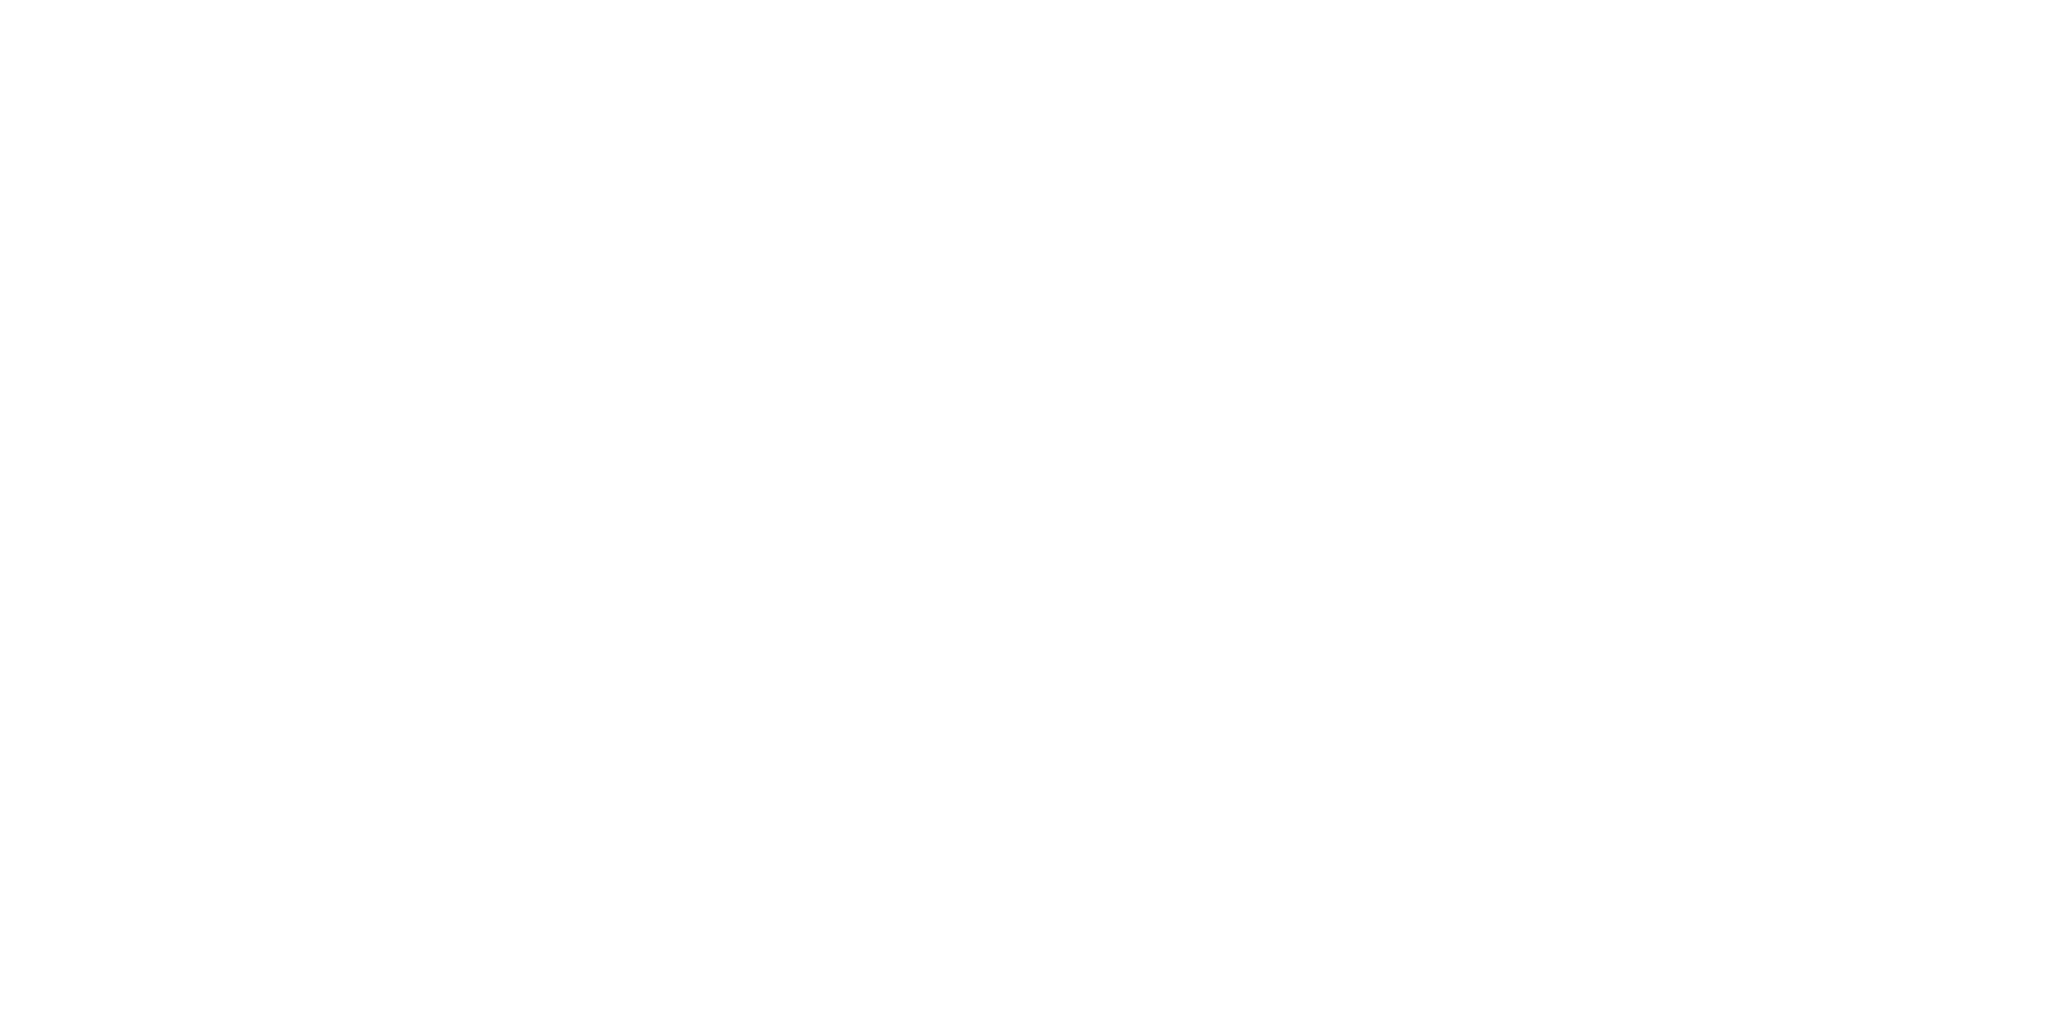 Fierce Fighting Championship